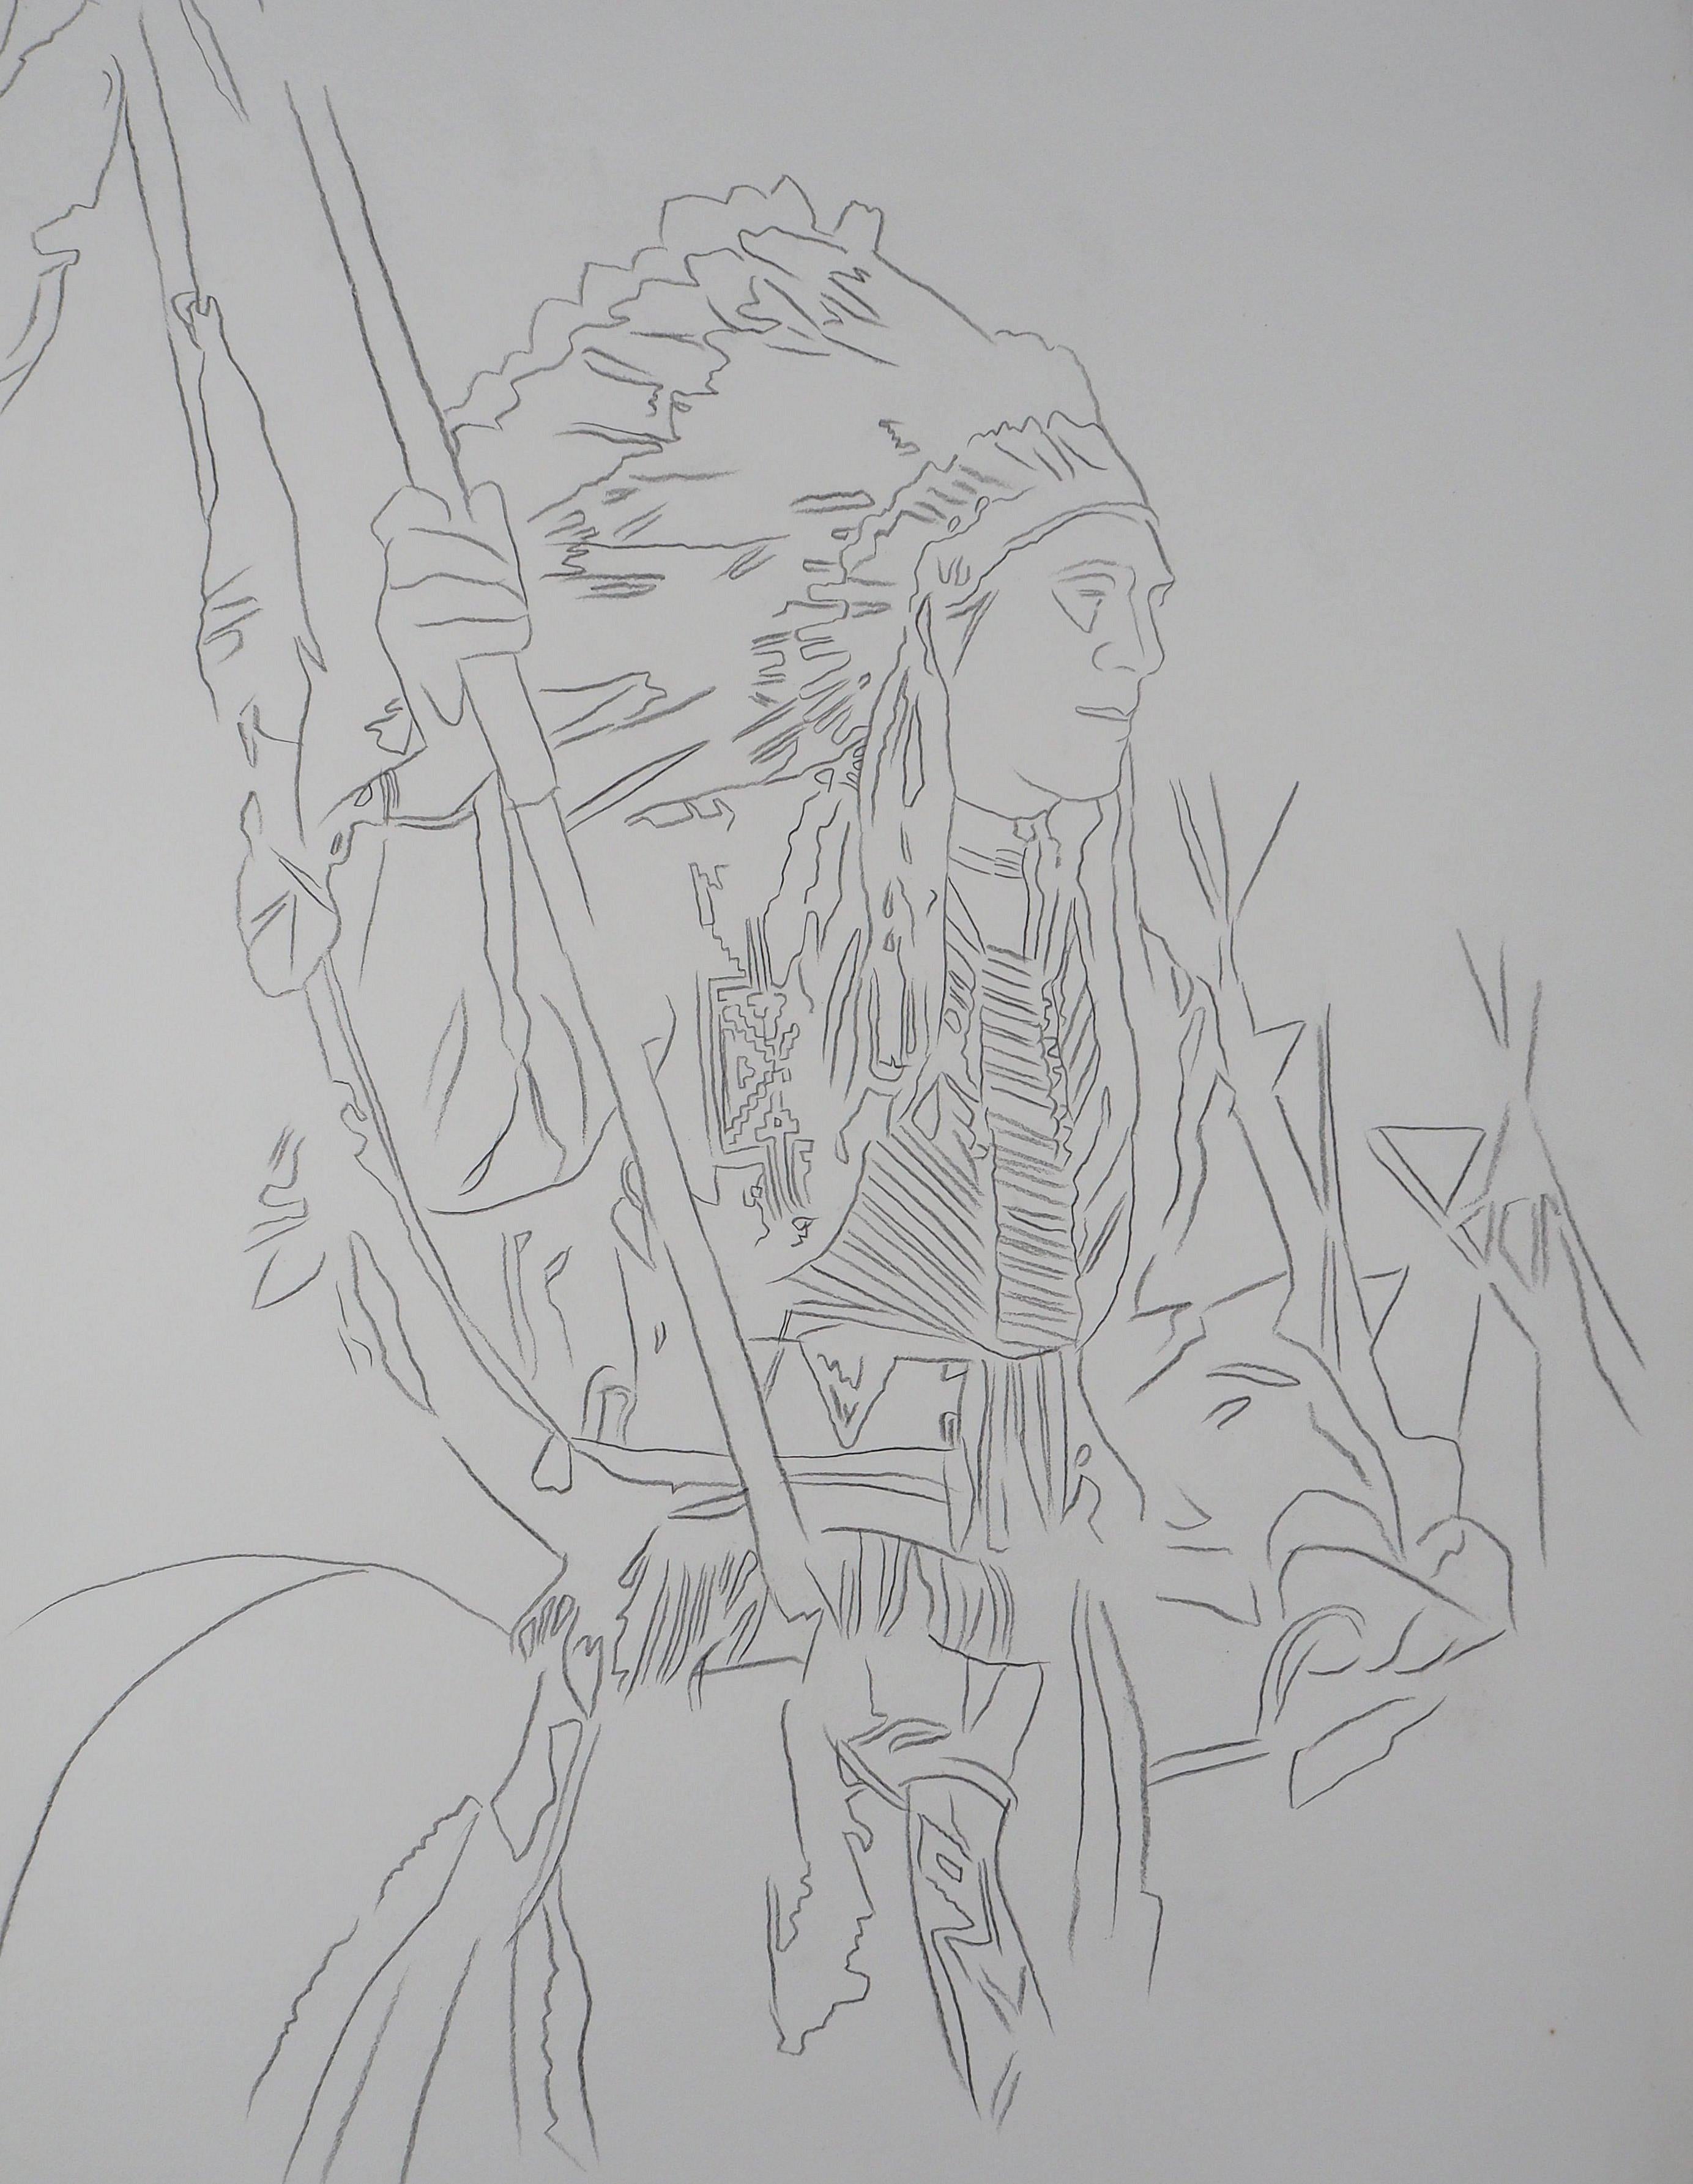 Indian : War Bonnet - dessin original au crayon (Fondation Warhol n°73.001) - Pop Art Art par Andy Warhol